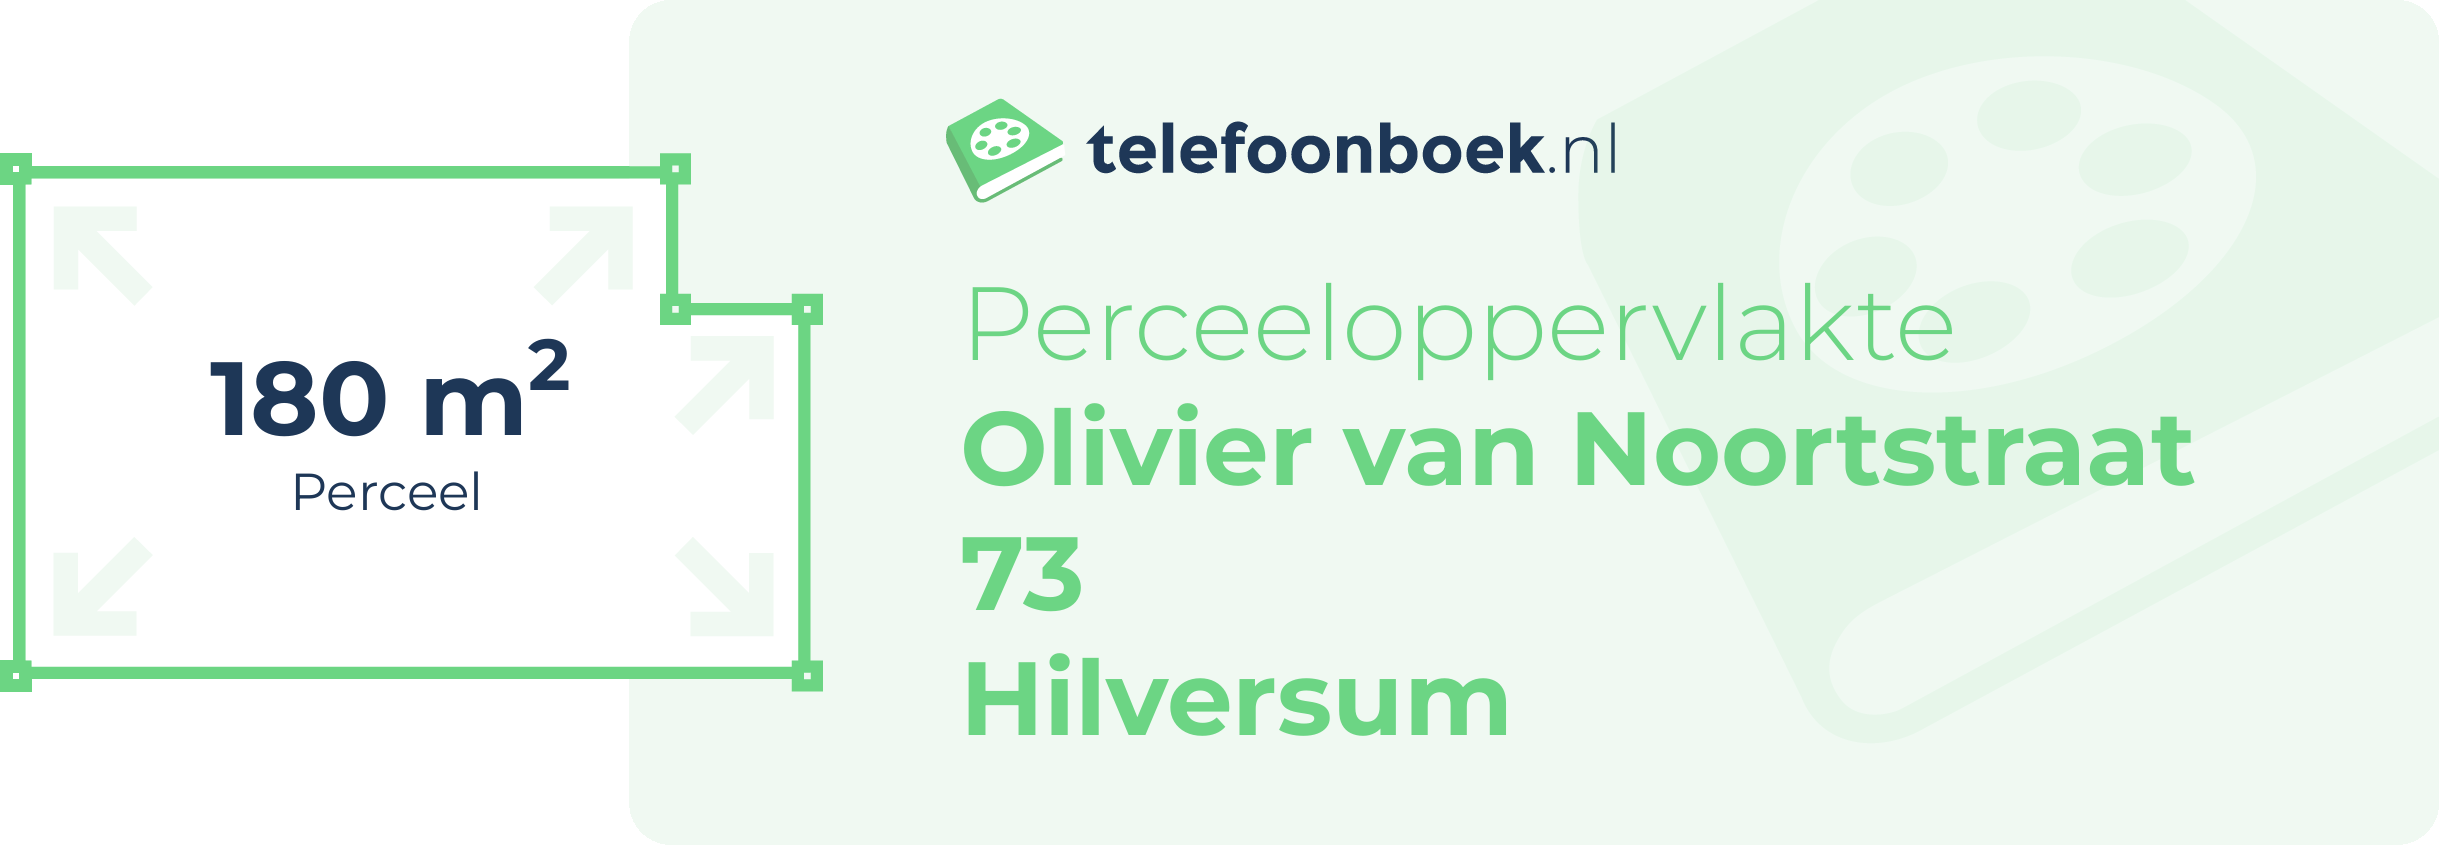 Perceeloppervlakte Olivier Van Noortstraat 73 Hilversum